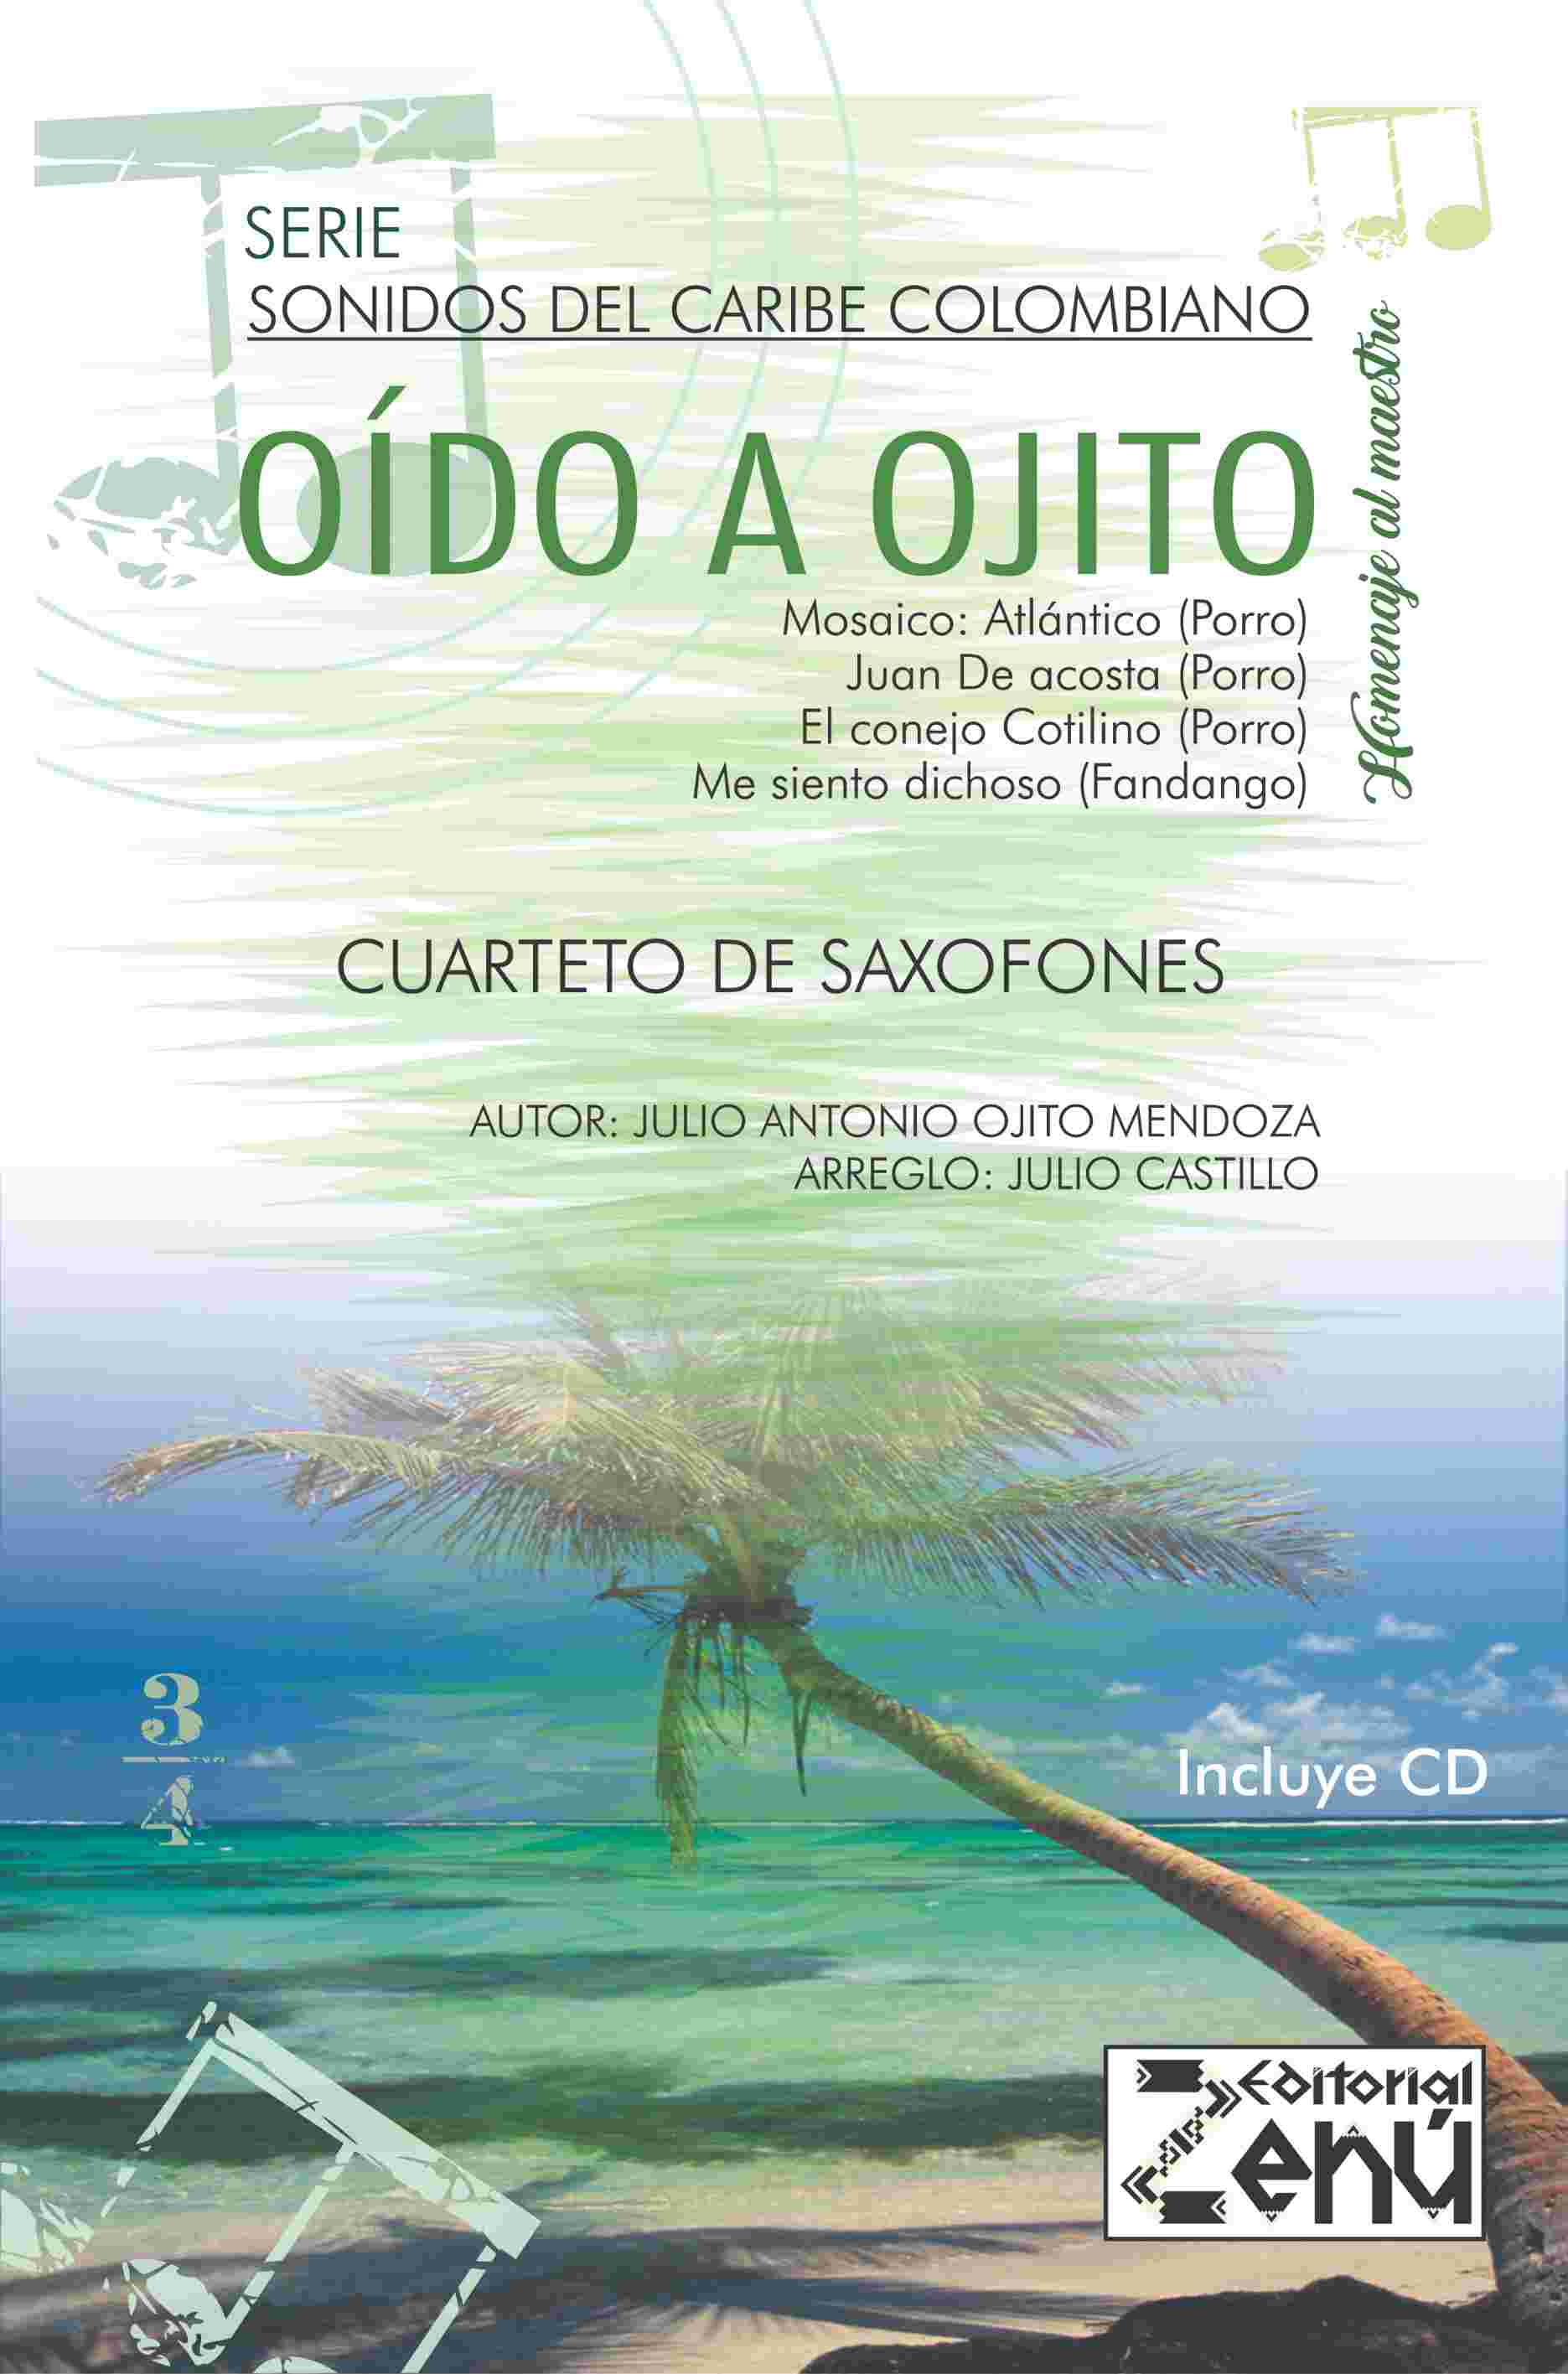 Serie Sonidos del Caribe colombiano - Oído a Ojito